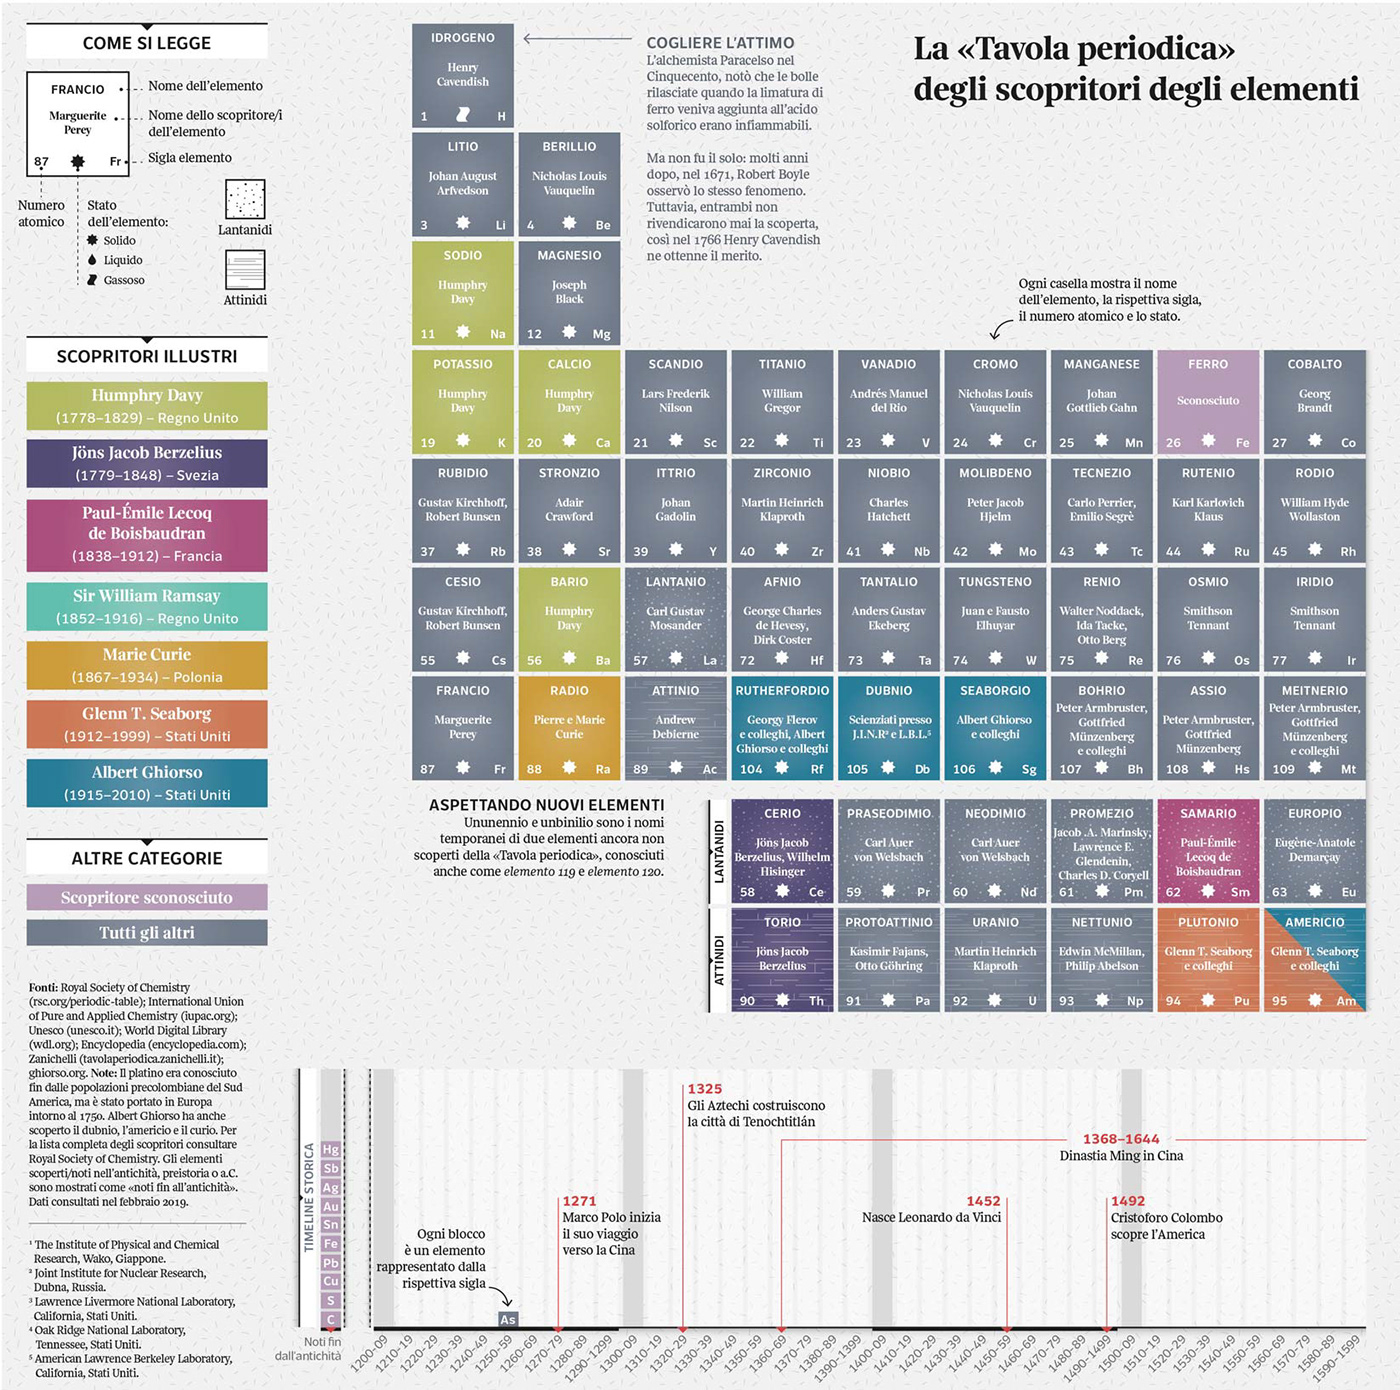 Data dataviz data visualization la lettura periodic table chemical elements science chemistry infographic timeline